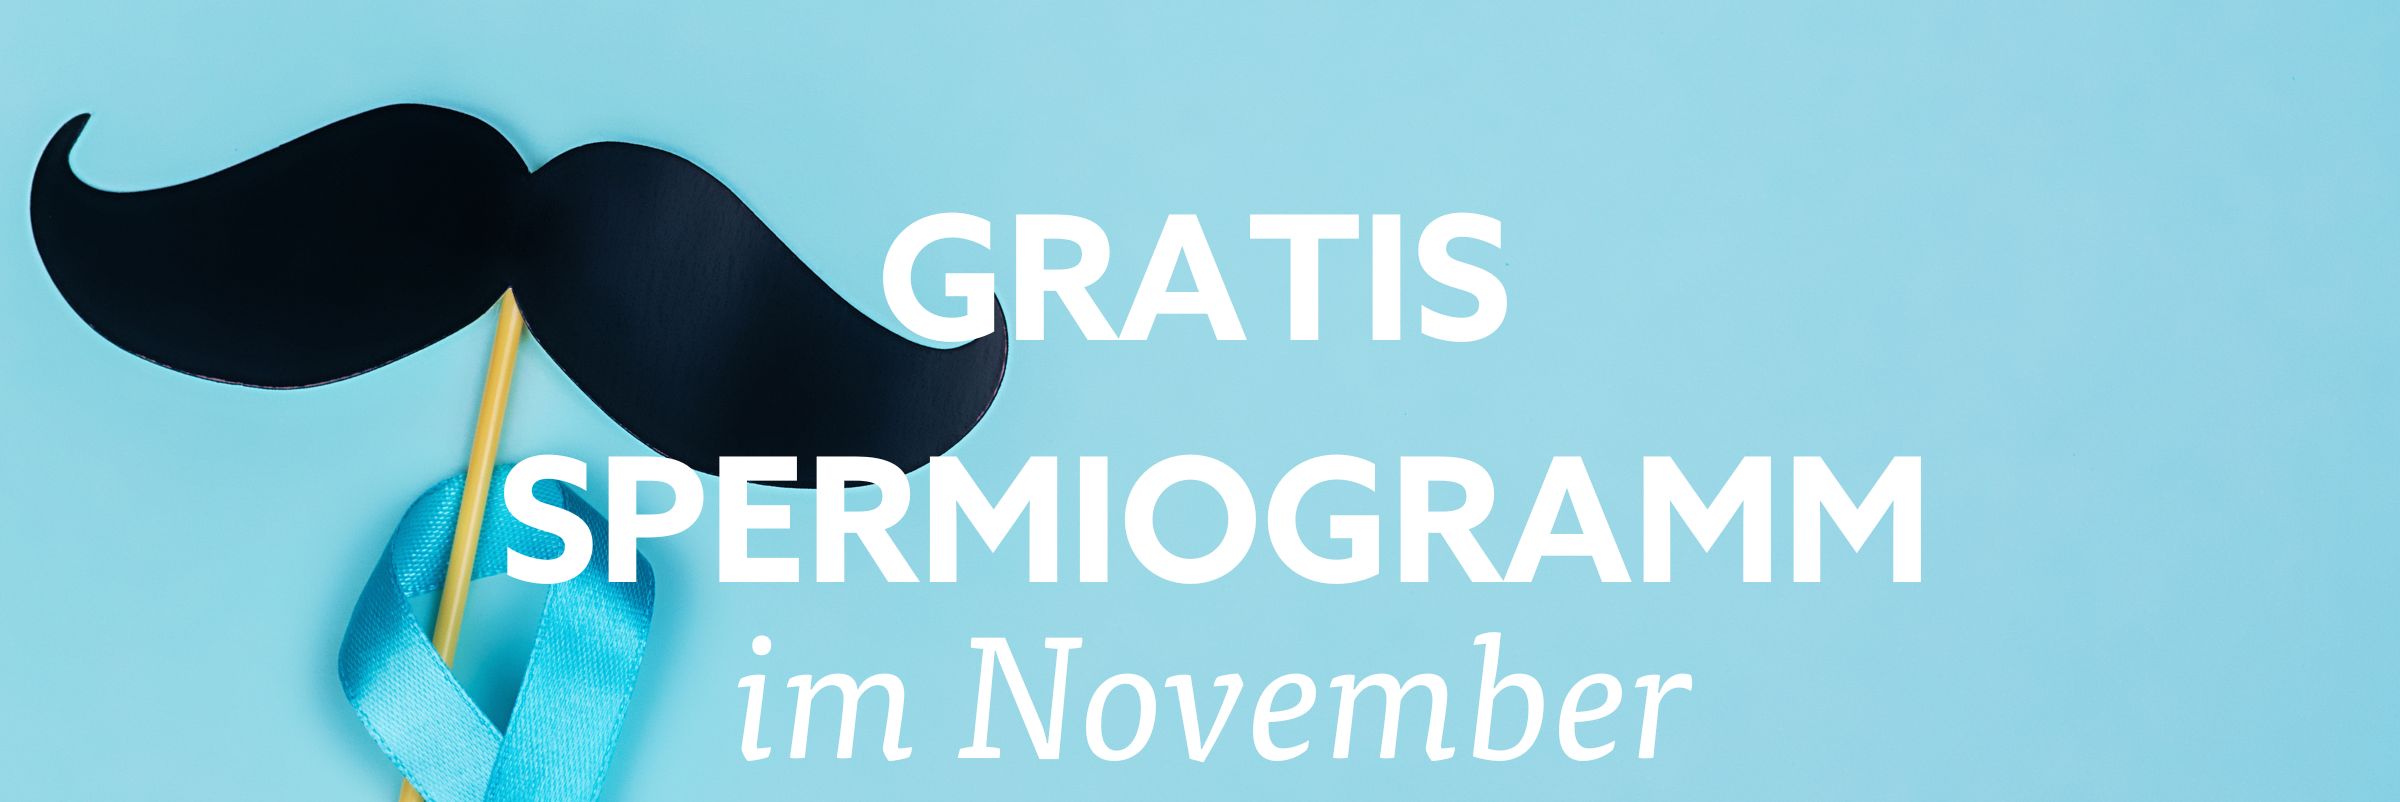 Spermiogramm Gratis Im November Banner